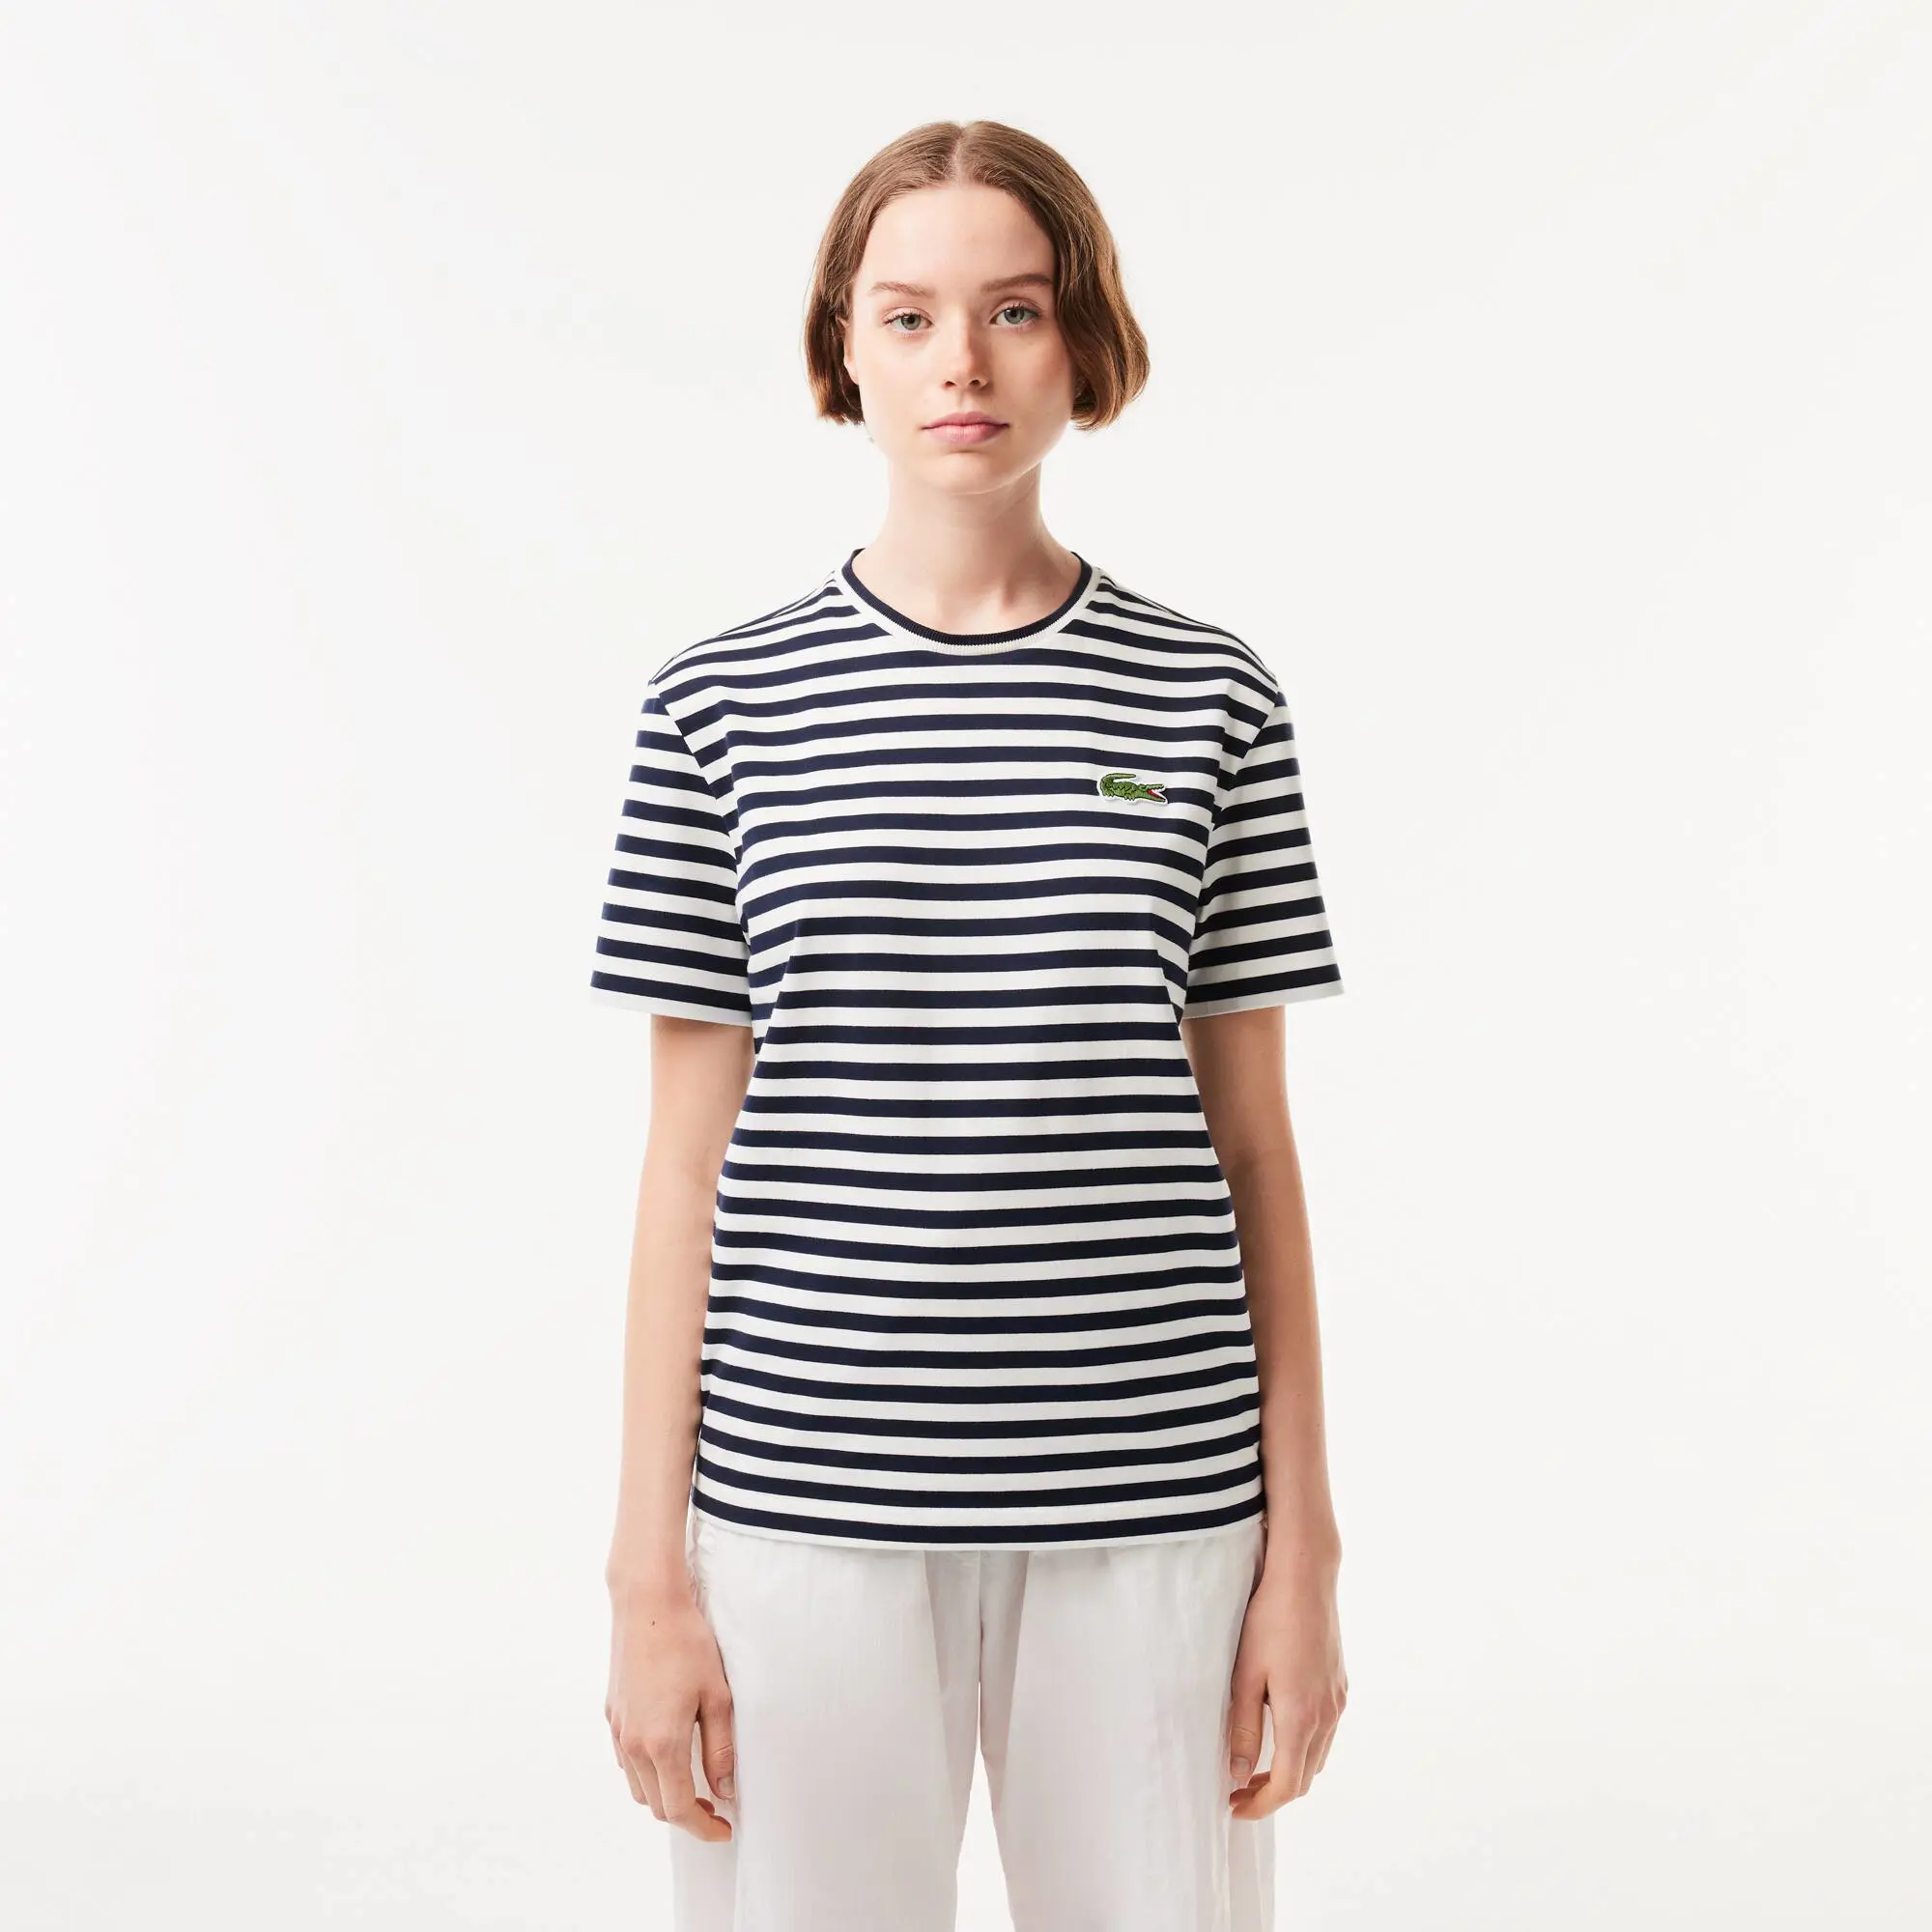 Lacoste Women's Lacoste Loose Fit Striped Cotton Jersey T-Shirt. 1